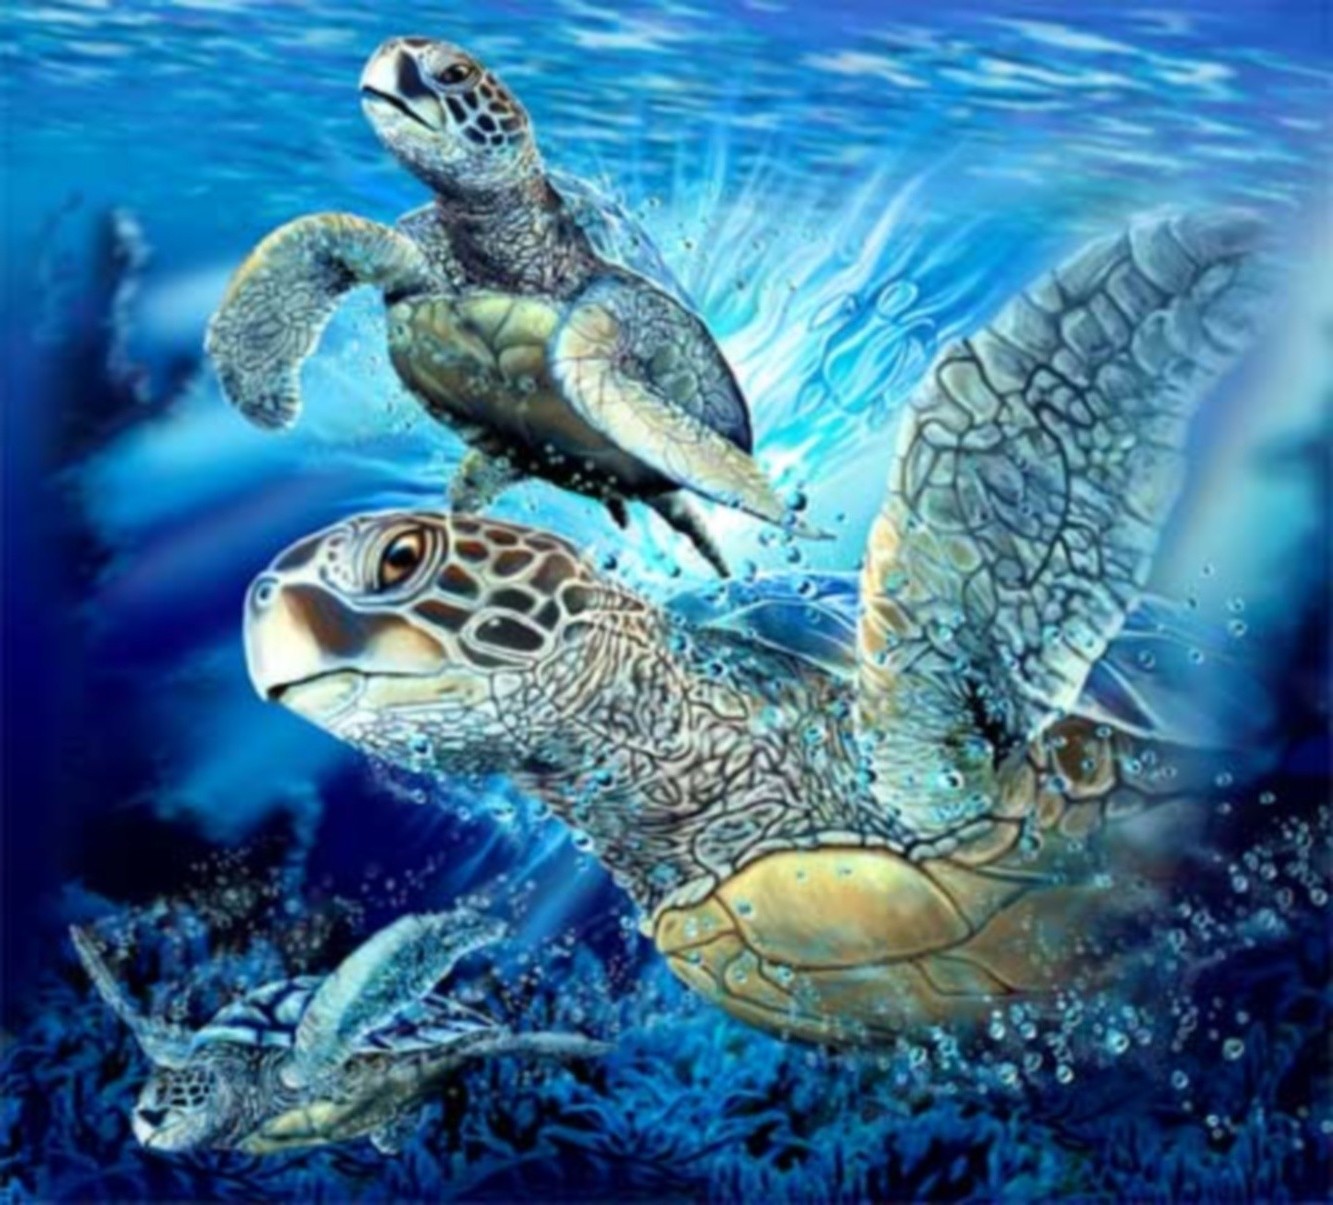 animals turtle underwater reptile sea marine ocean reef aquatic tropical animal nature swimming coral wildlife scuba water diving shell tortoise fish